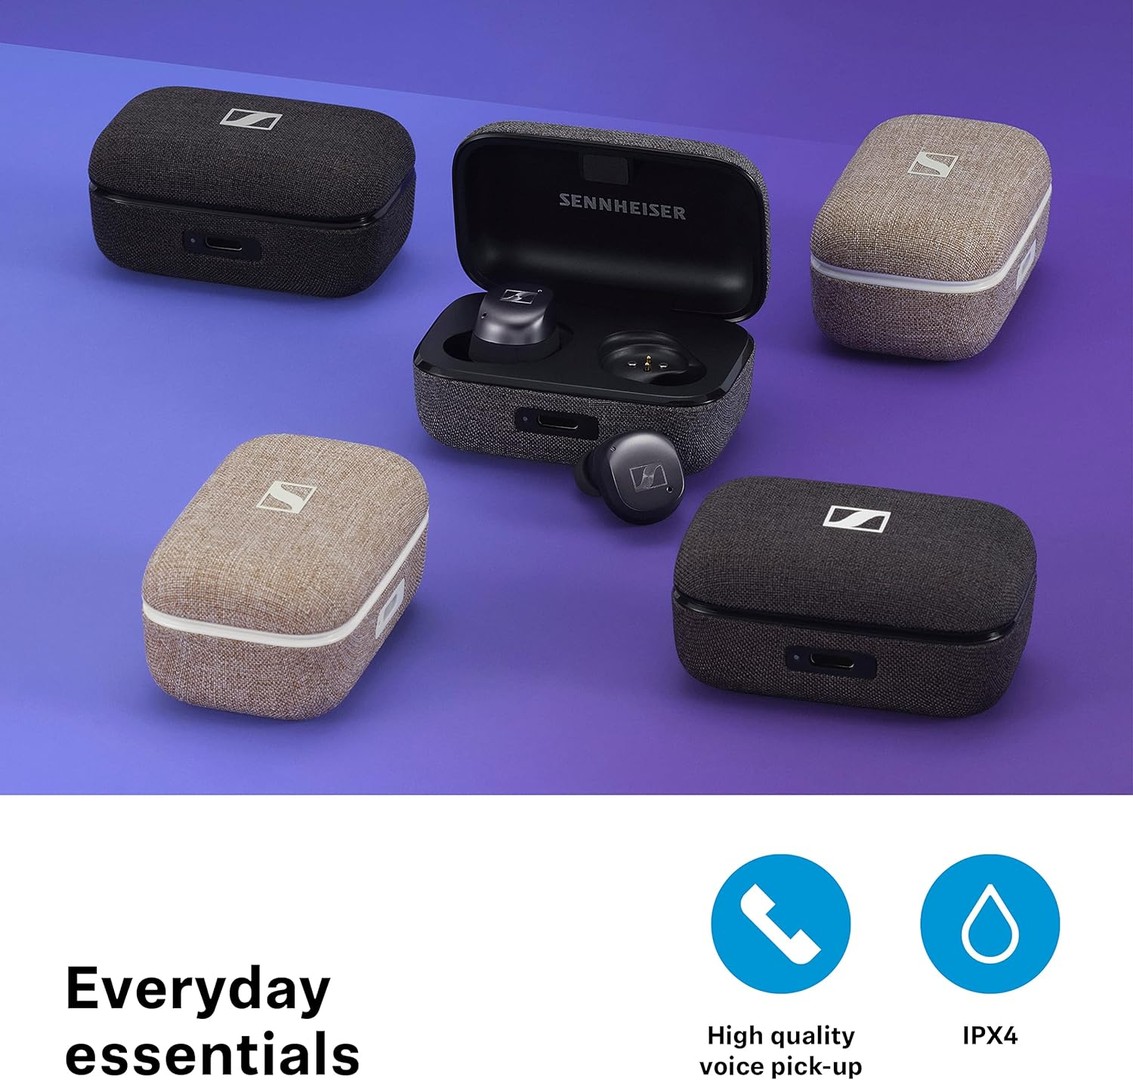 camaras y audio - Sennheiser Momentum 3 TWS Earbuds Audífonos Bluetooth, ANC, IPX5, Qi Charging 6